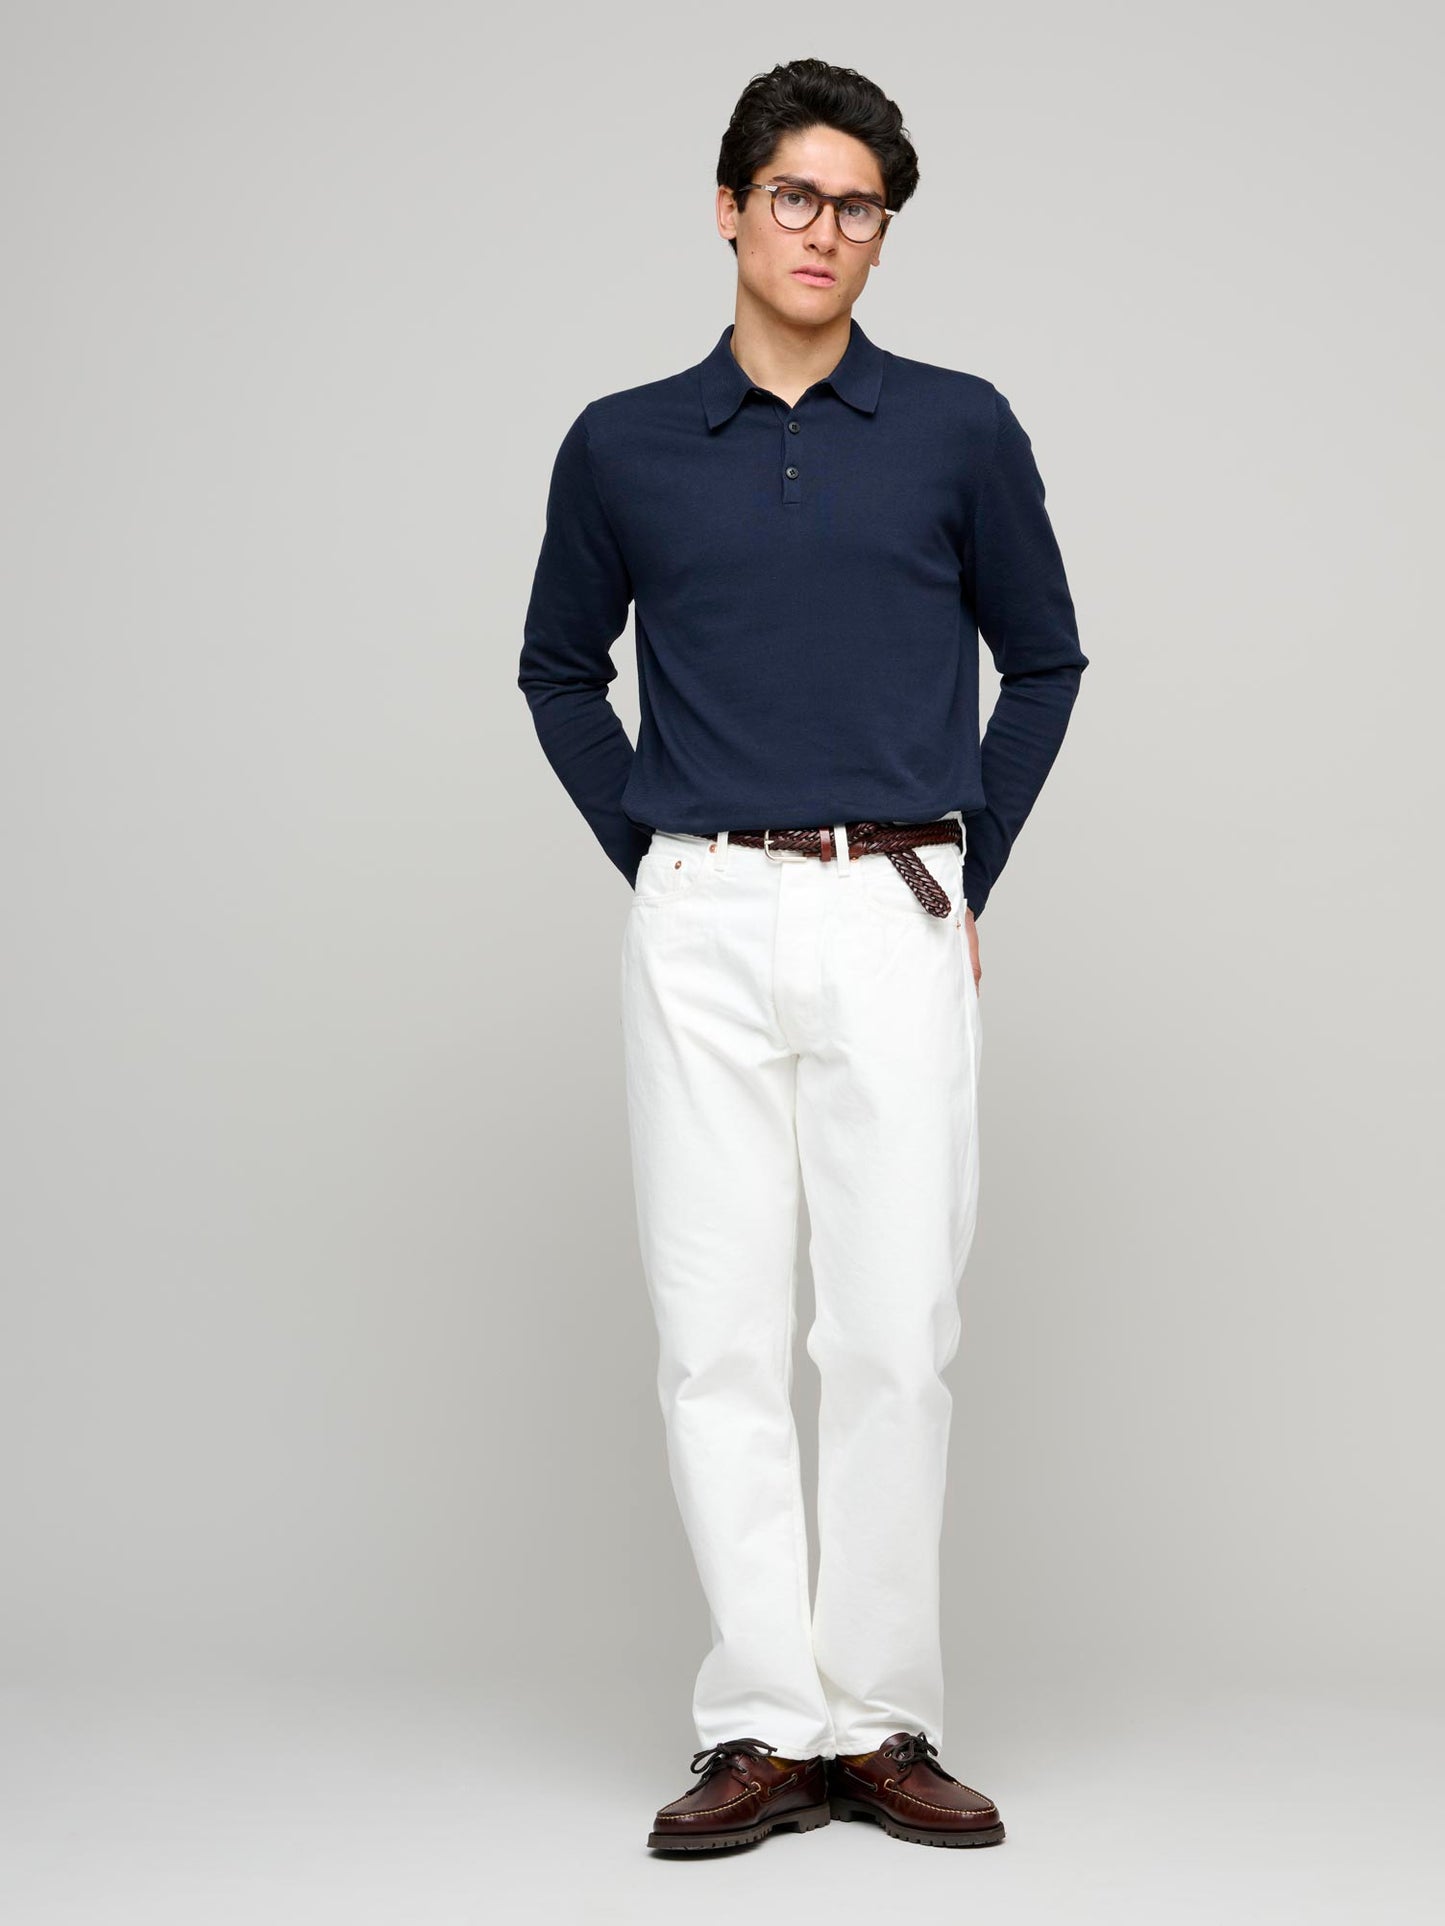 Sea Island Cotton Long Sleeve Polo Shirt, Light Navy